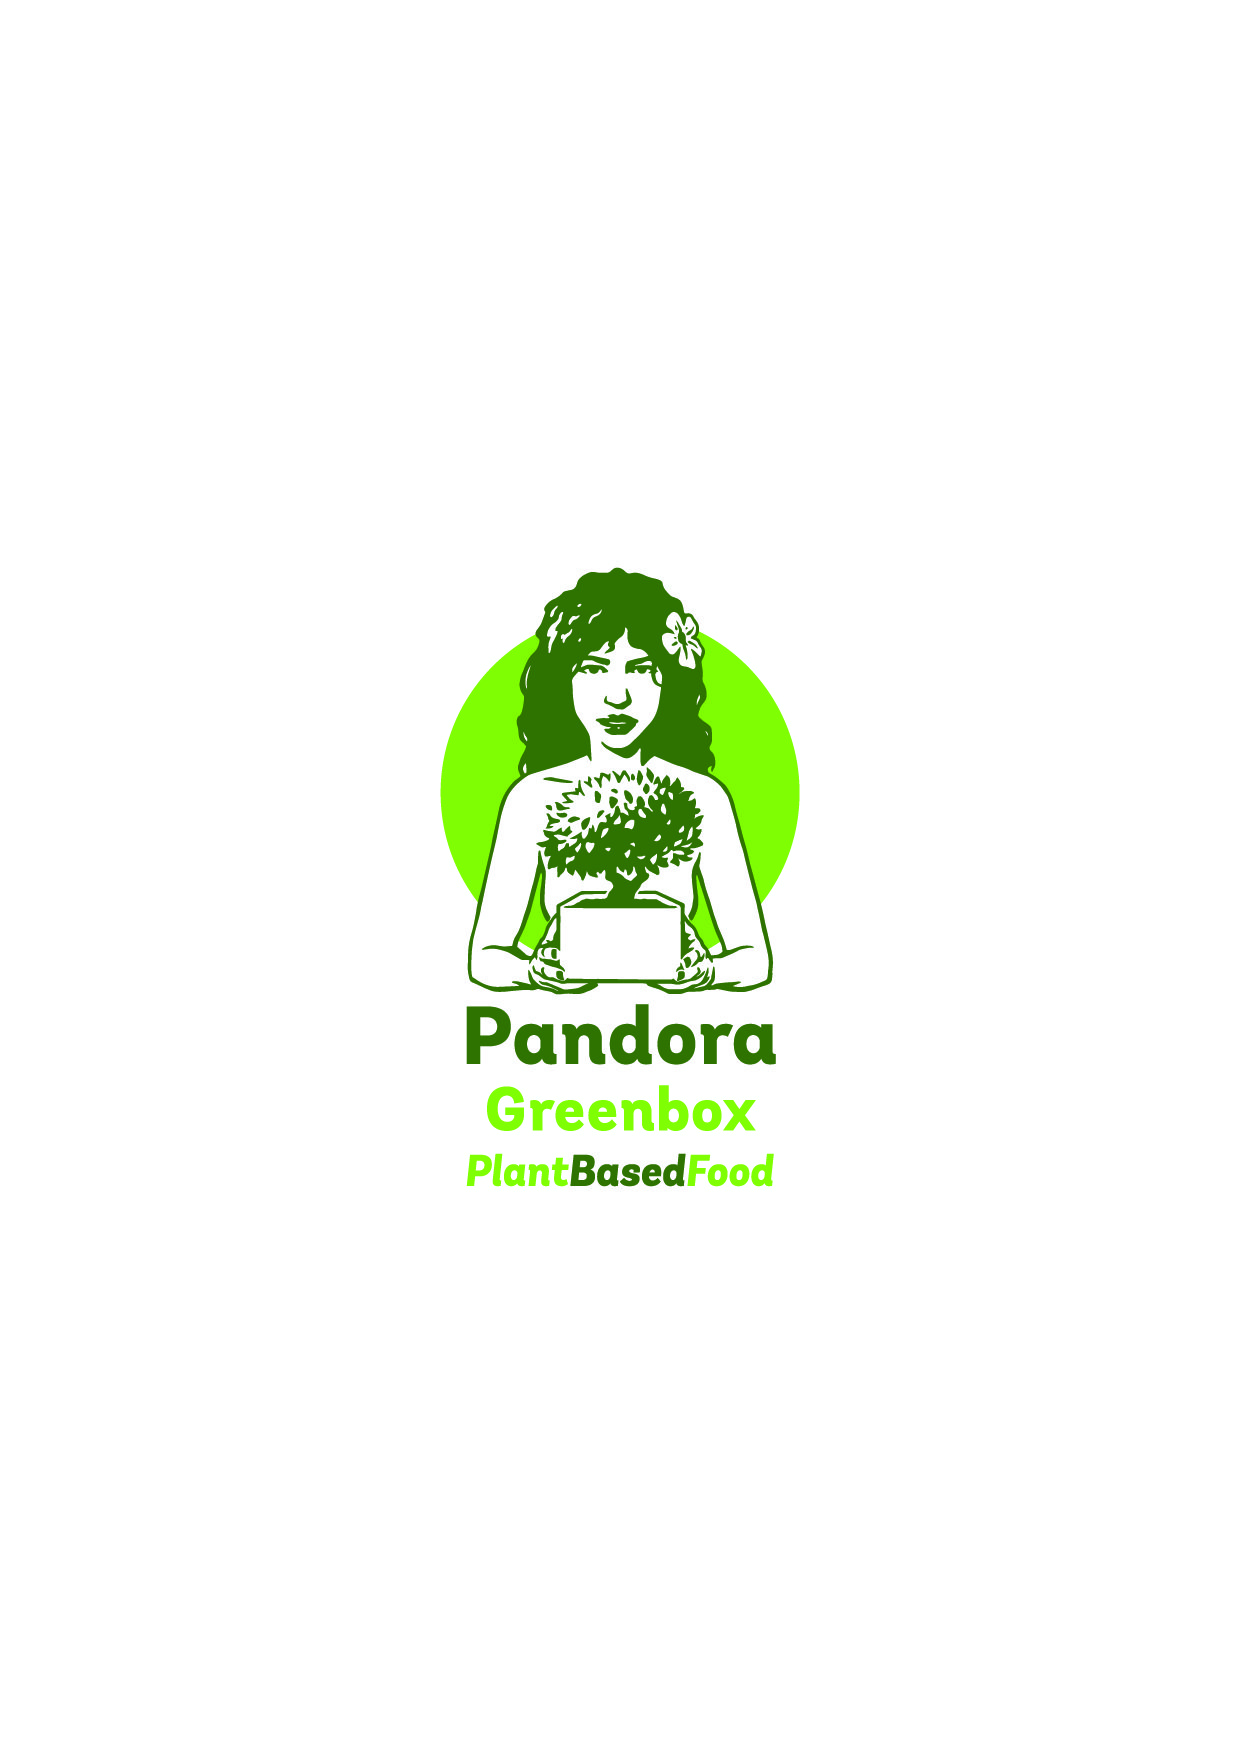 Pandora Greenbox logo